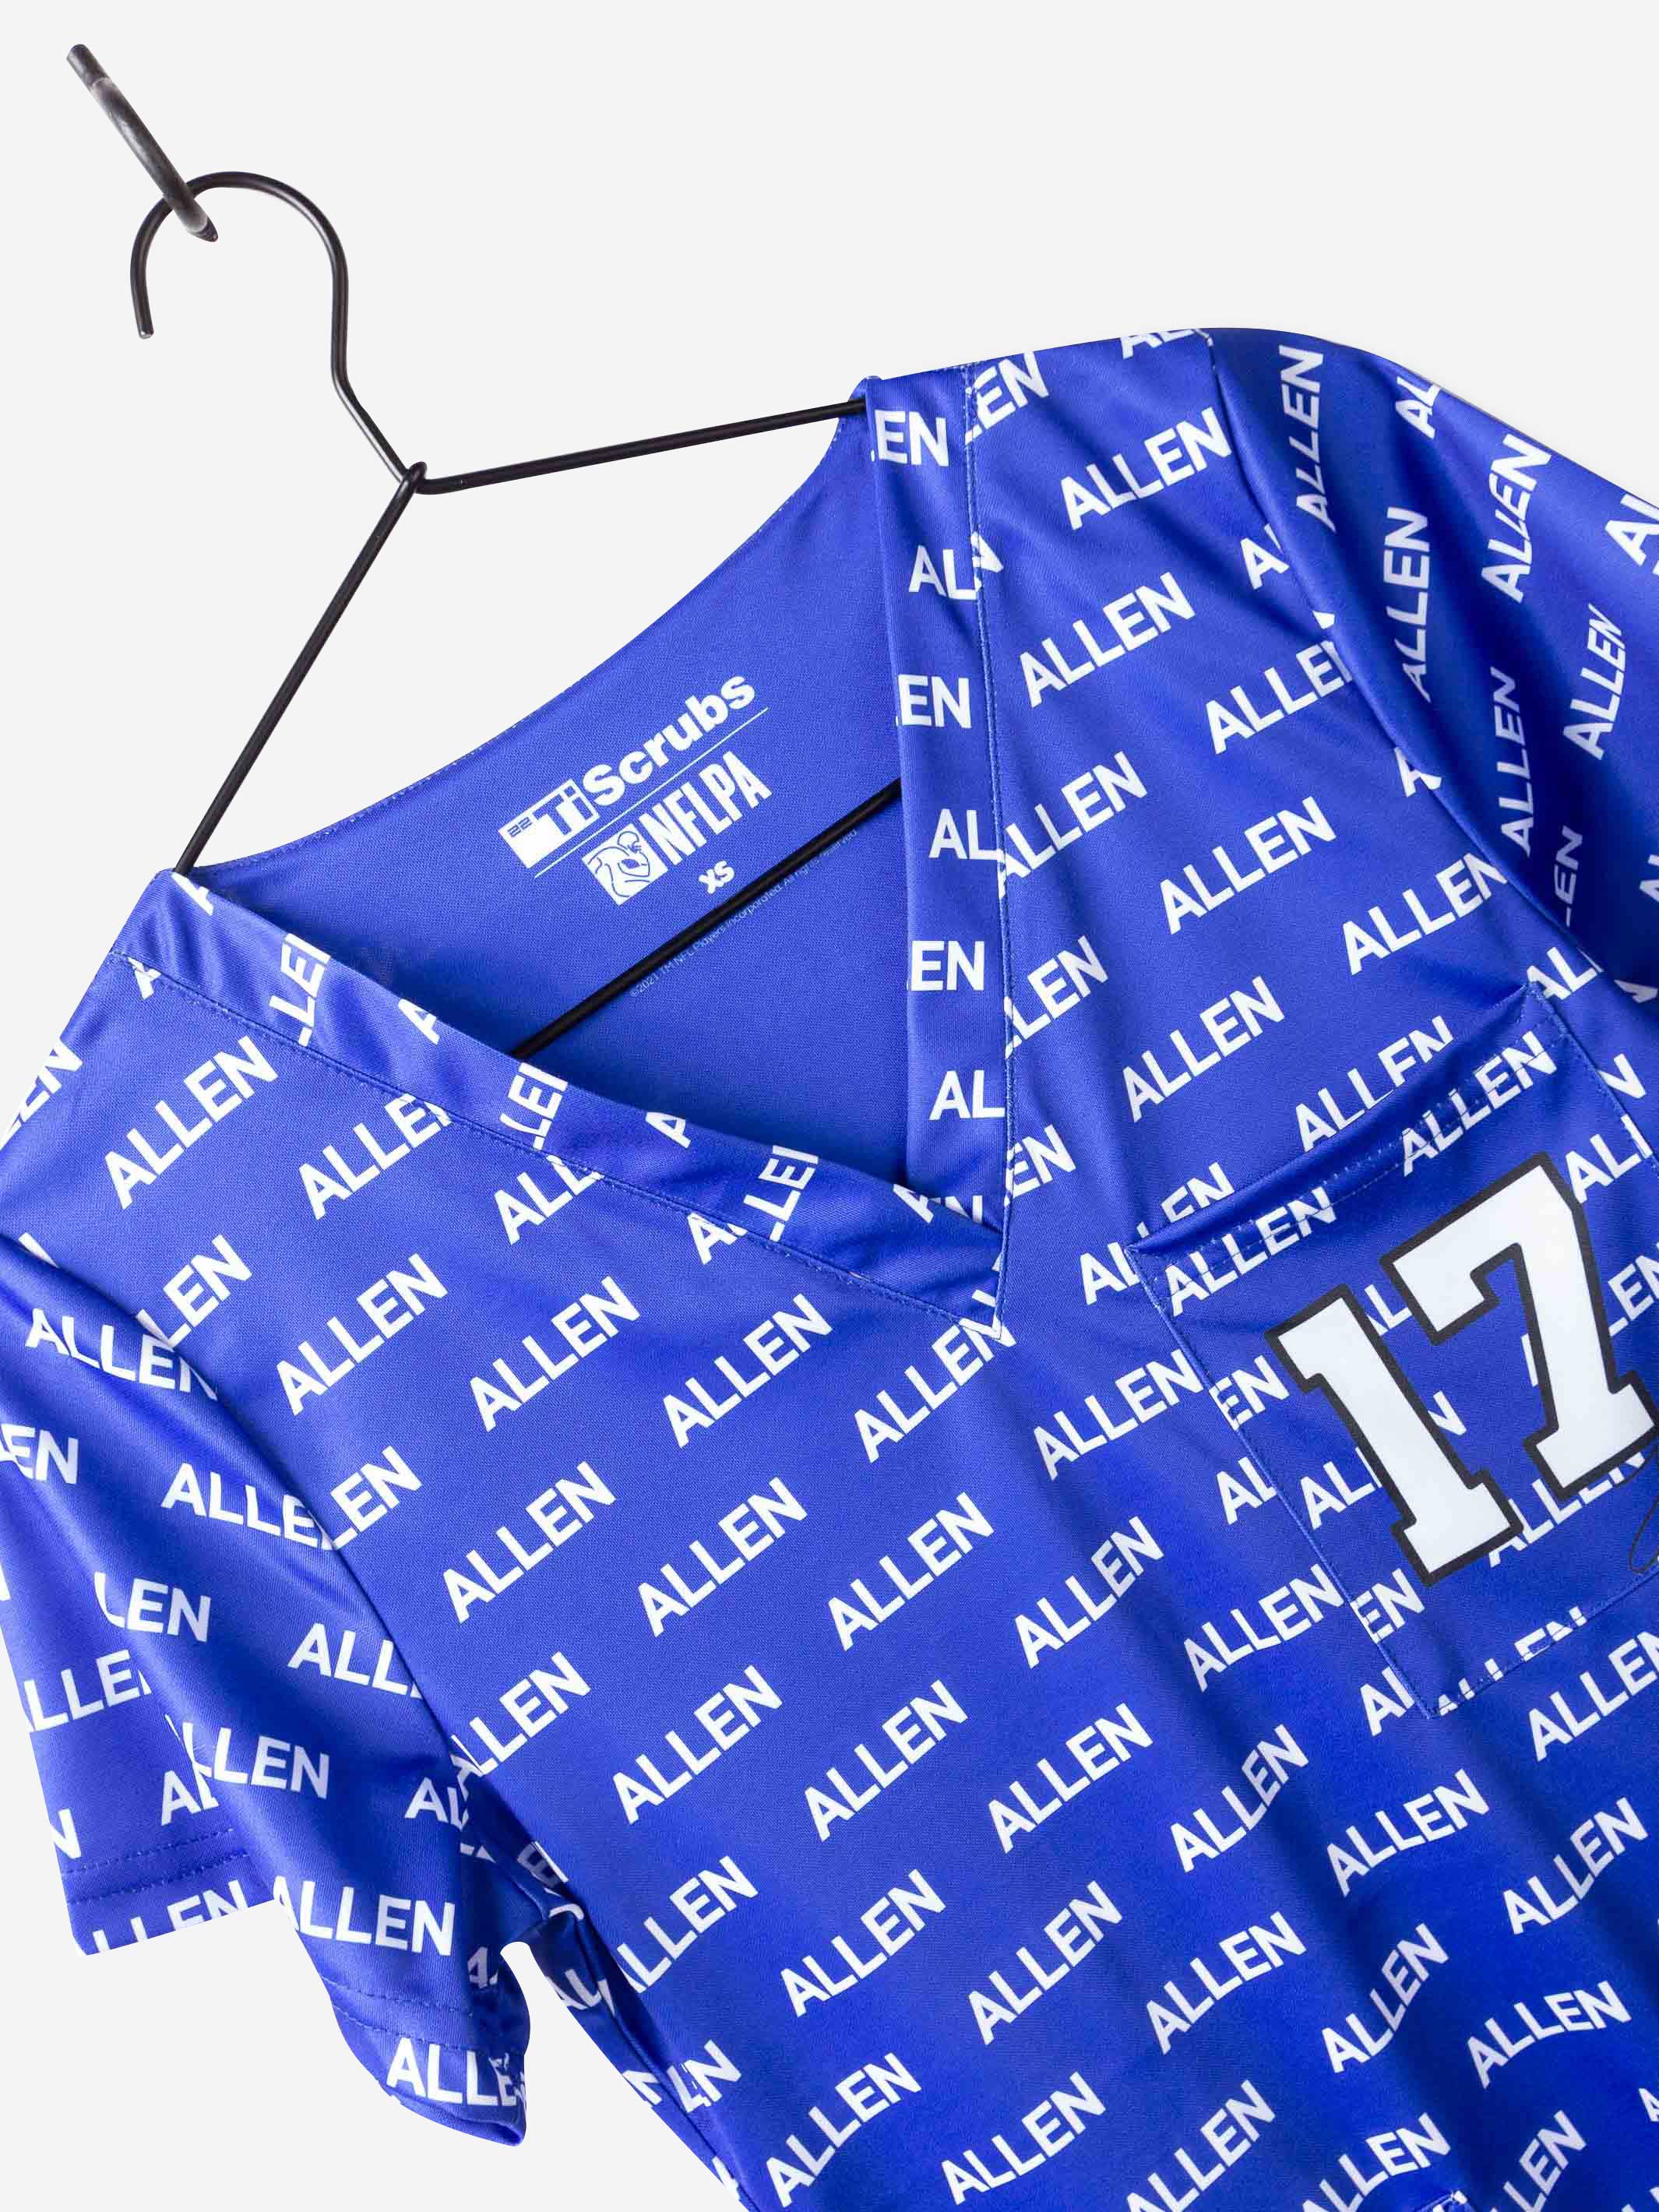 Women's NFL Josh Allen Scrub Top in Royal Blue with mesh fabric